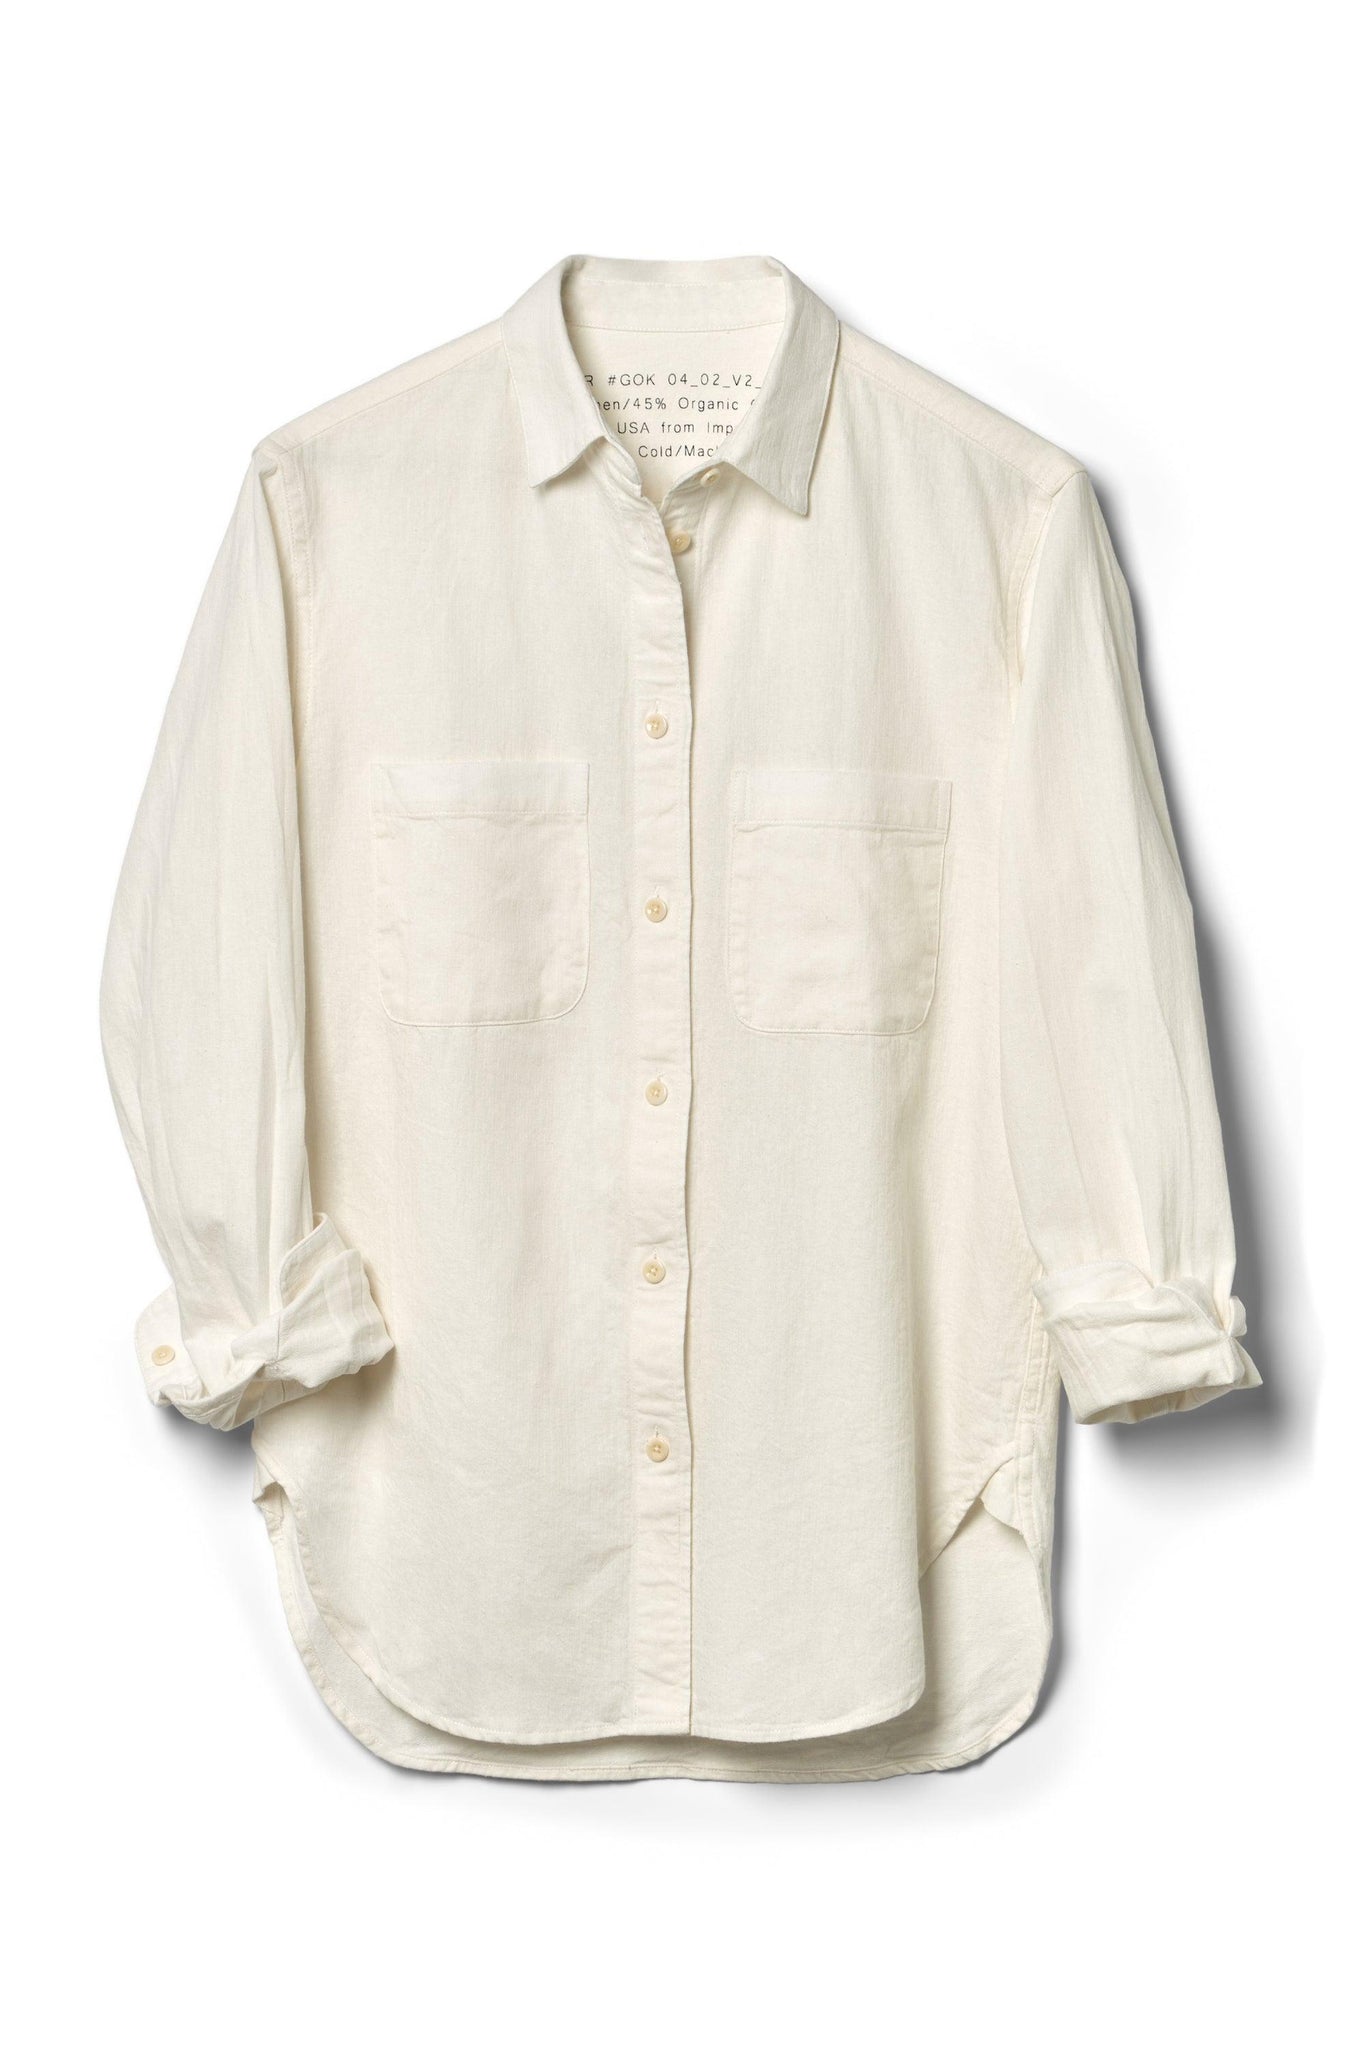 4Worn Work Shirt Linen by 4 in Shirts & Tops